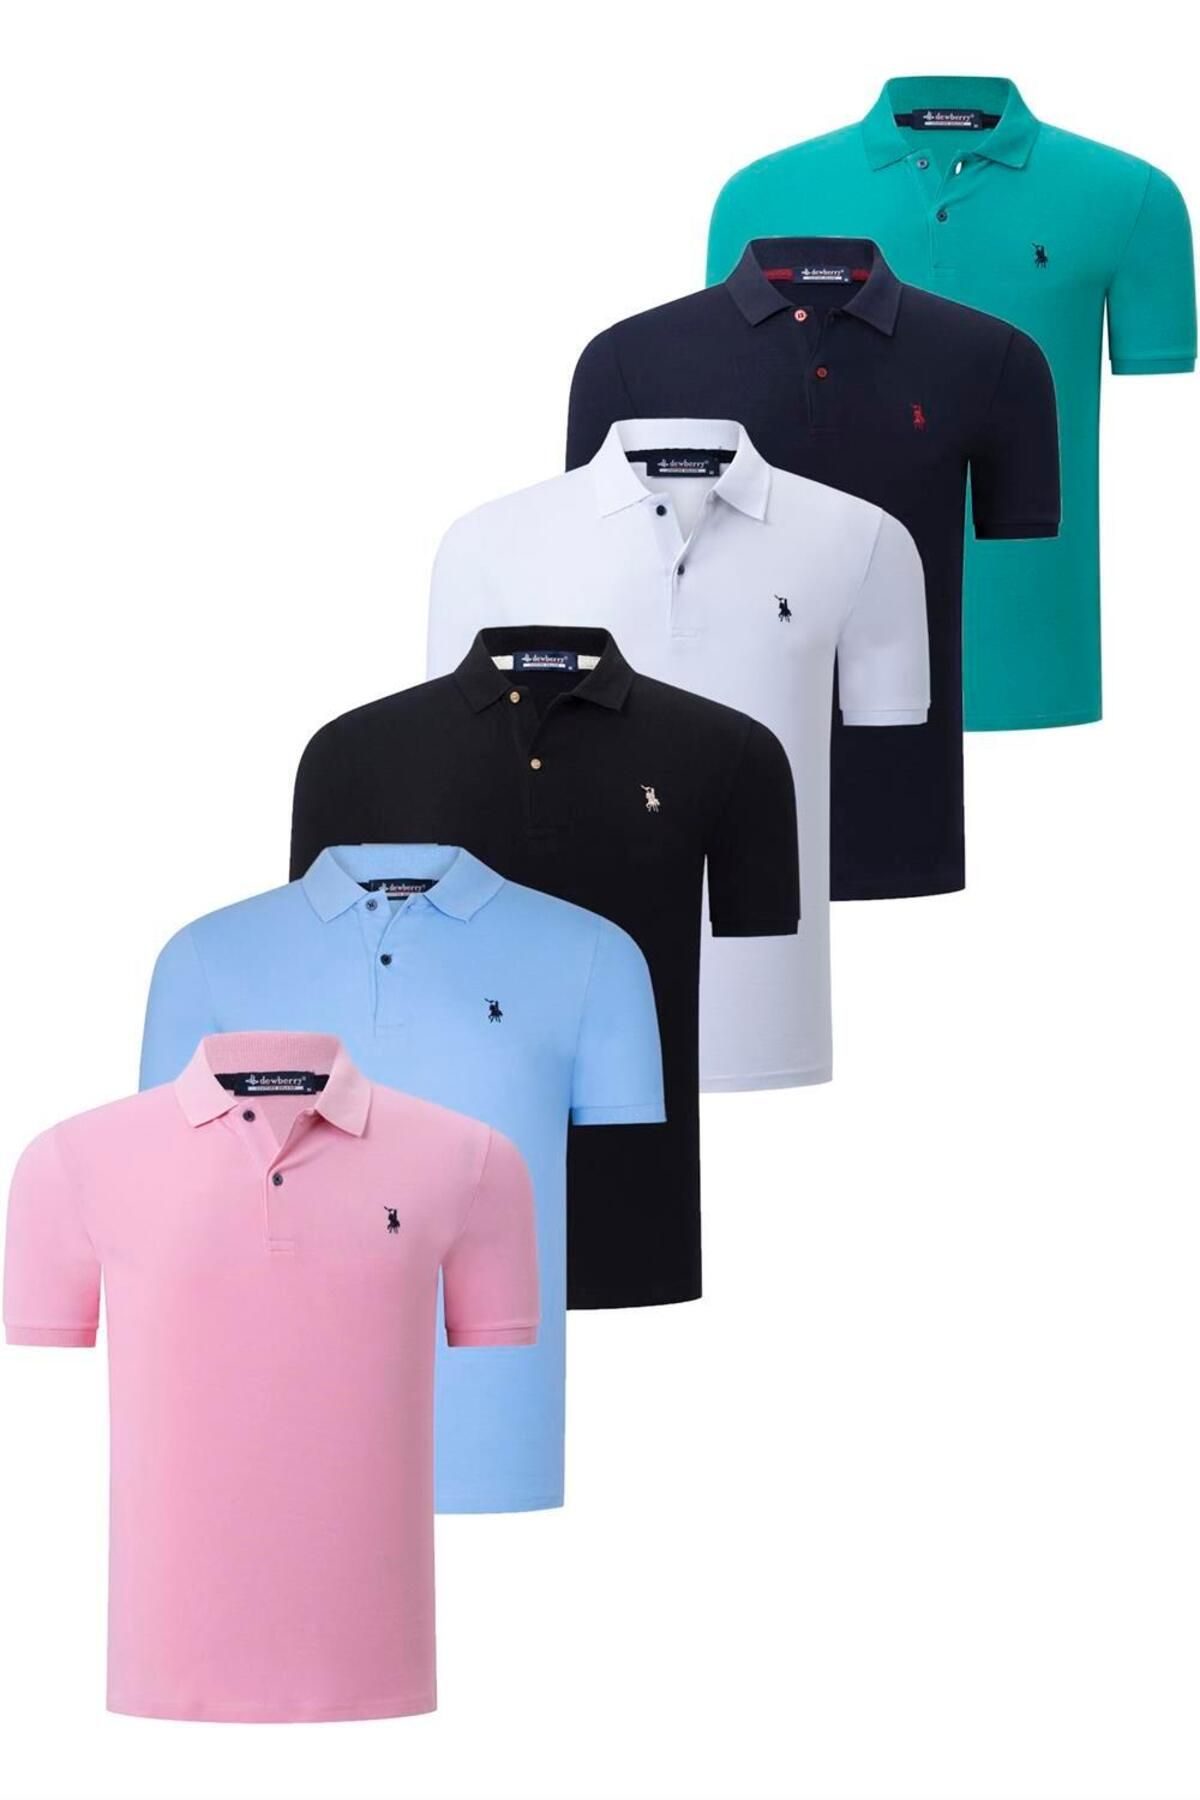 Dewberry ست شش عددی تی شرت مردانه T8561 Dewberry-مشکی-سفید-آبی تیره-صورتی-آبی روشن-سبز روشن